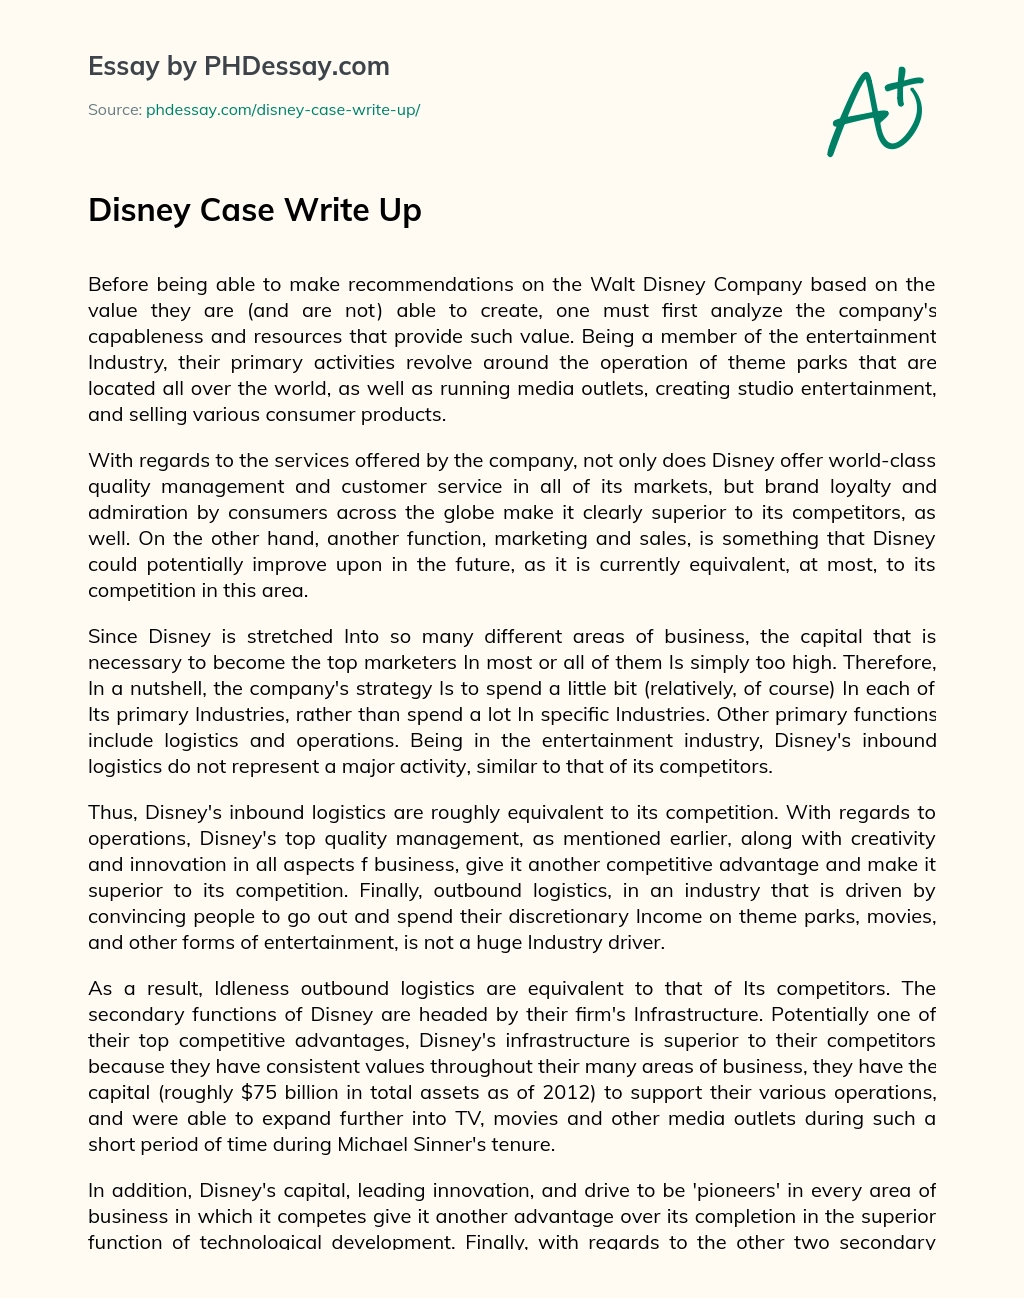 Disney Case Write Up essay